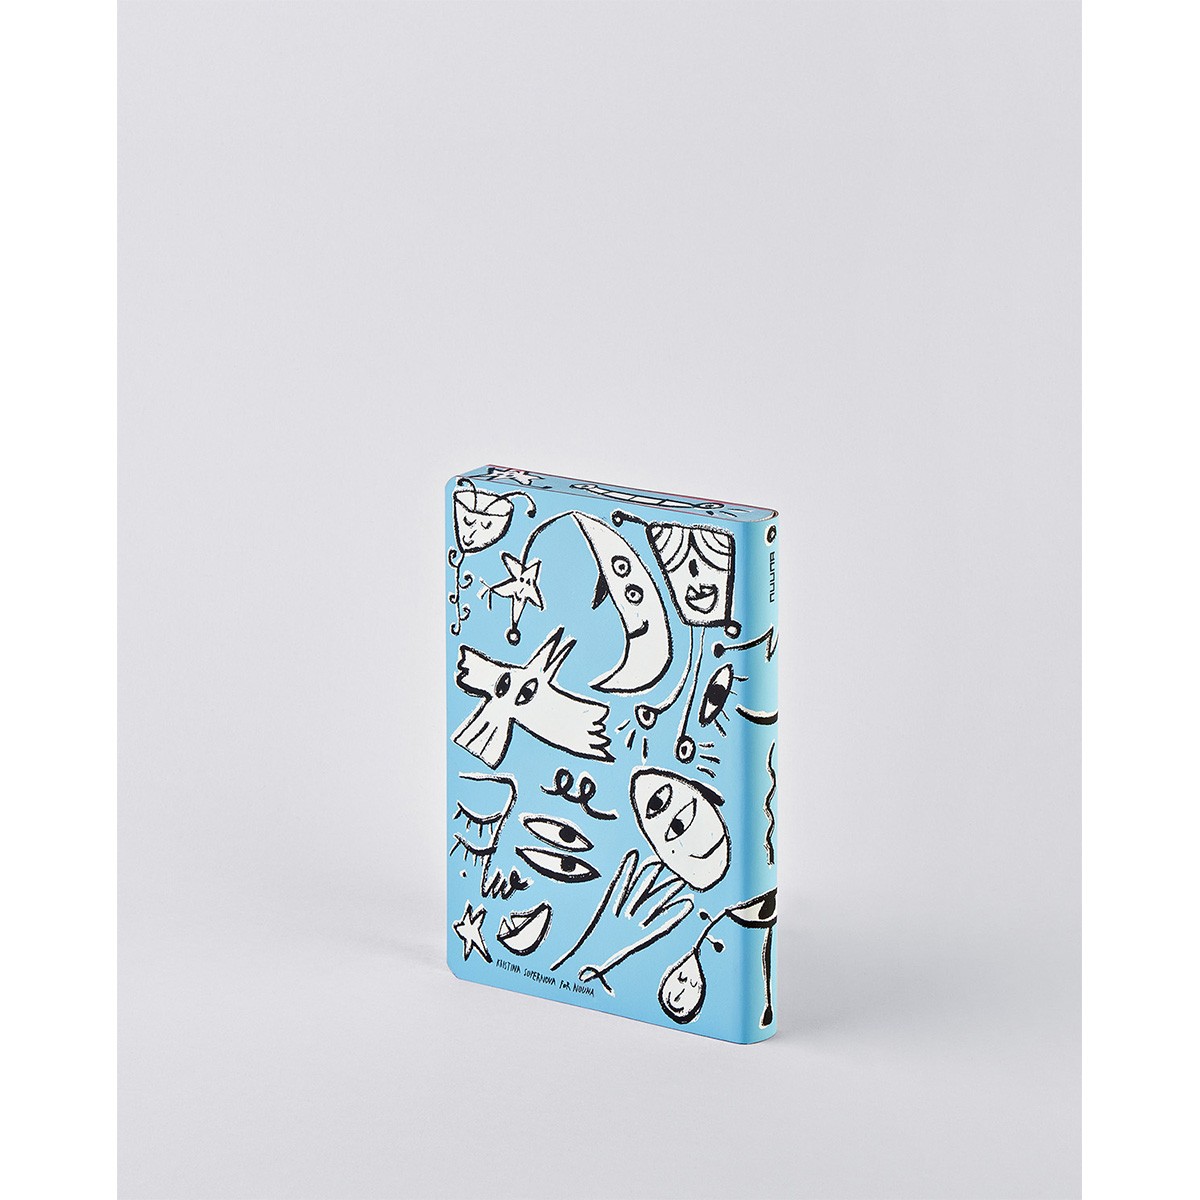 Nuuna Notebooks Graphic S - Day Dreamer by Kristina Supernova